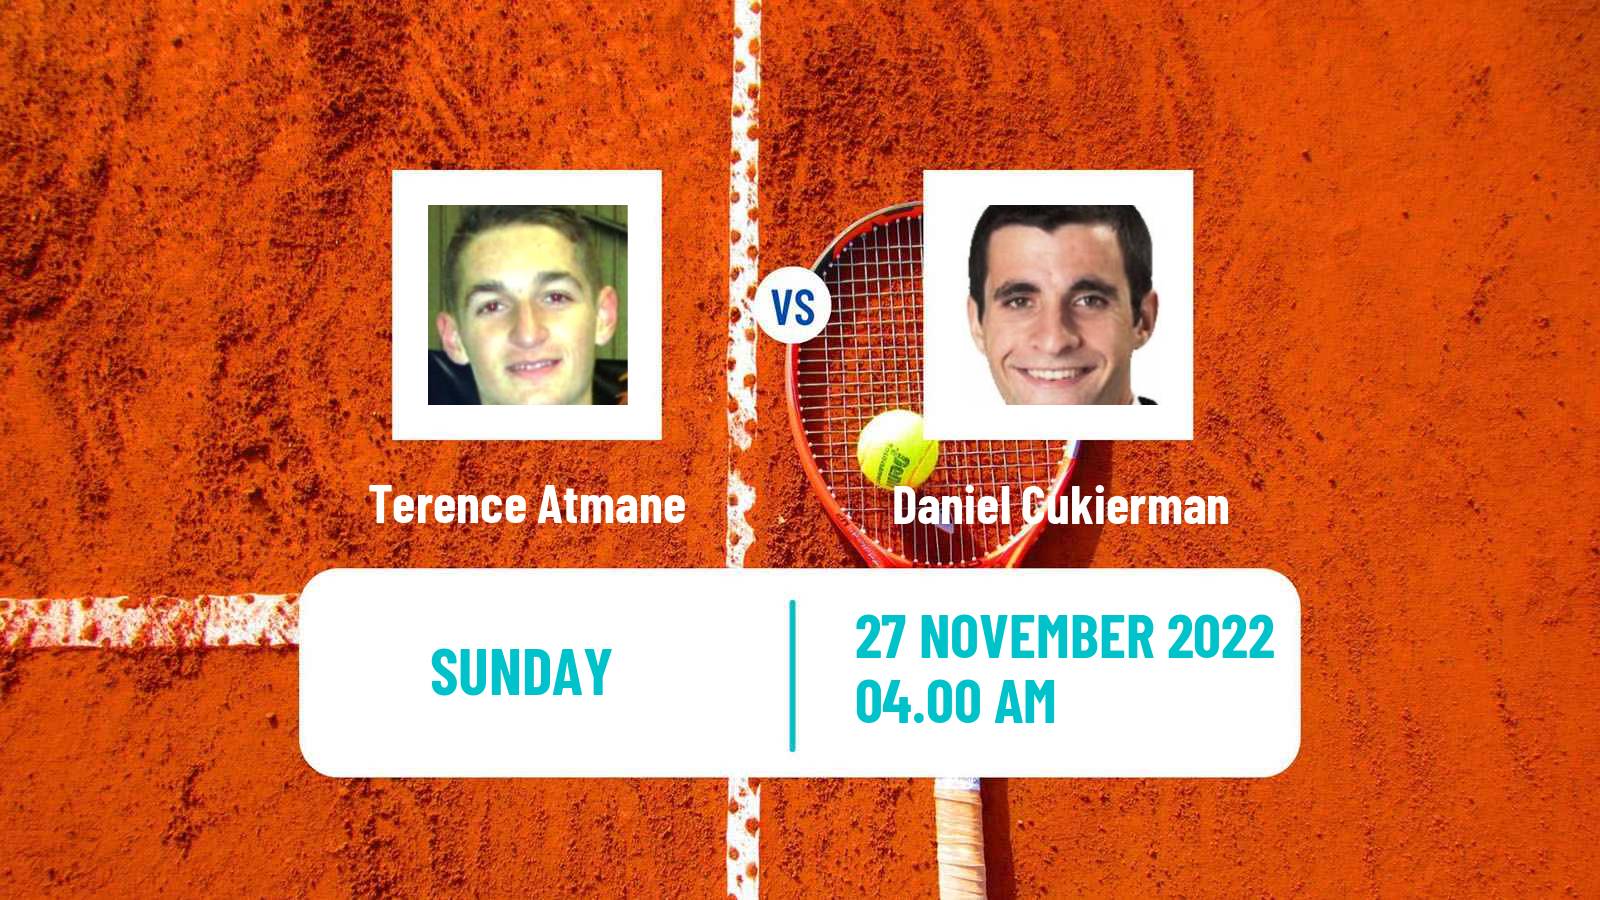 Tennis ITF Tournaments Terence Atmane - Daniel Cukierman